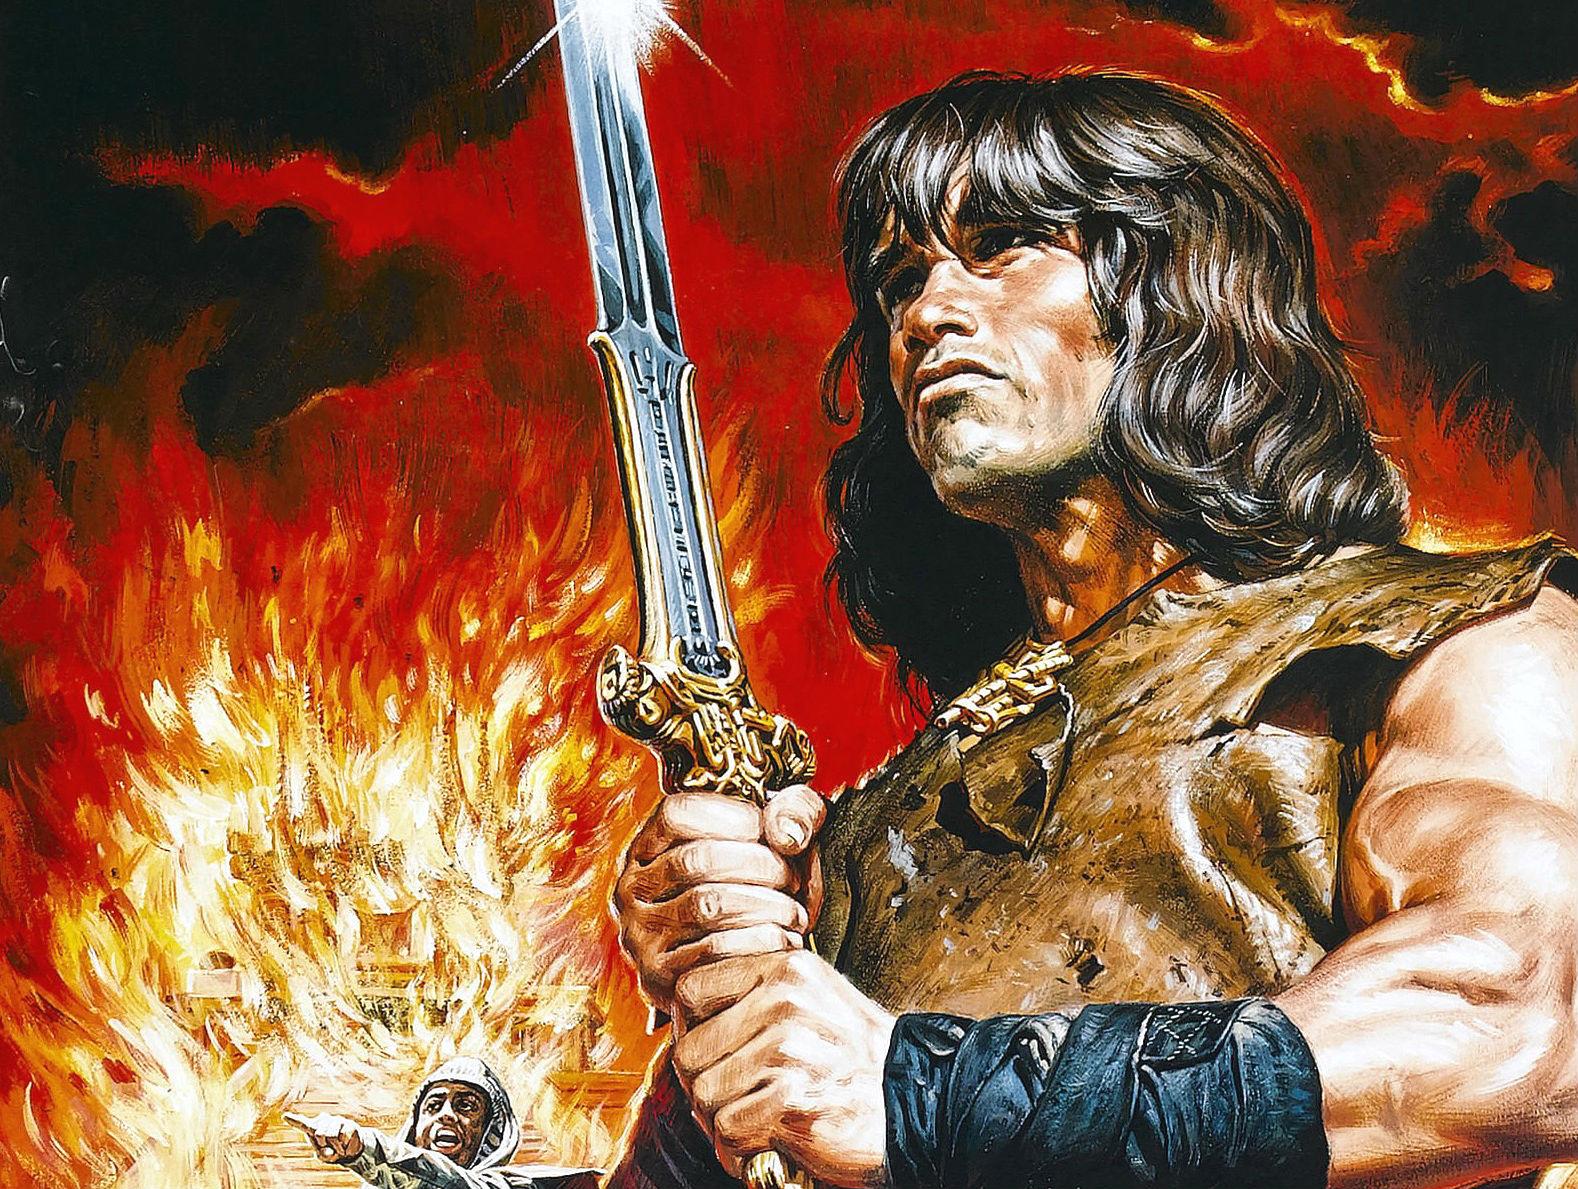 Conan The Barbarian (1982) Wallpapers HD Download